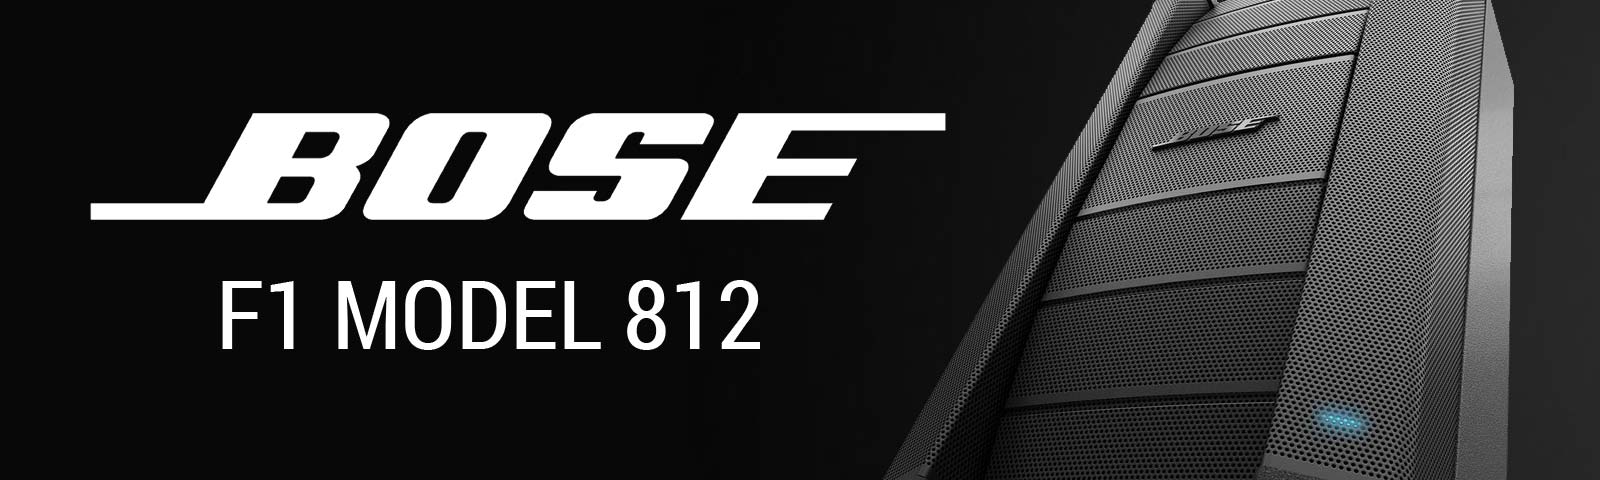 Bose F1 Model 812 Hire